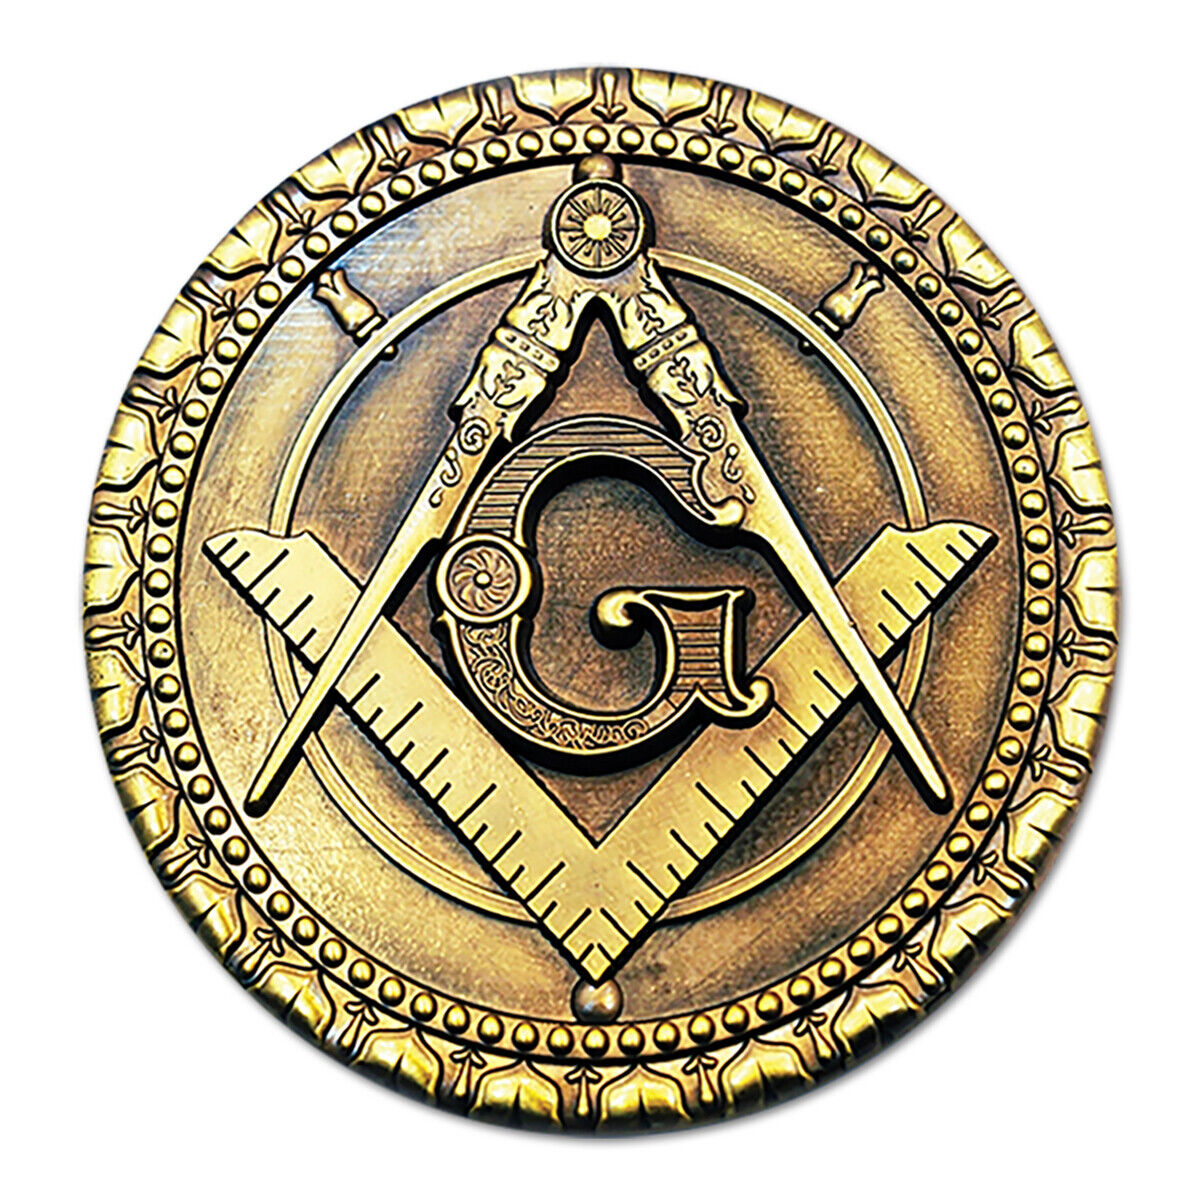 3 Diameter Blue & Gold F&AM Square & Compass Round Masonic Auto Emblem